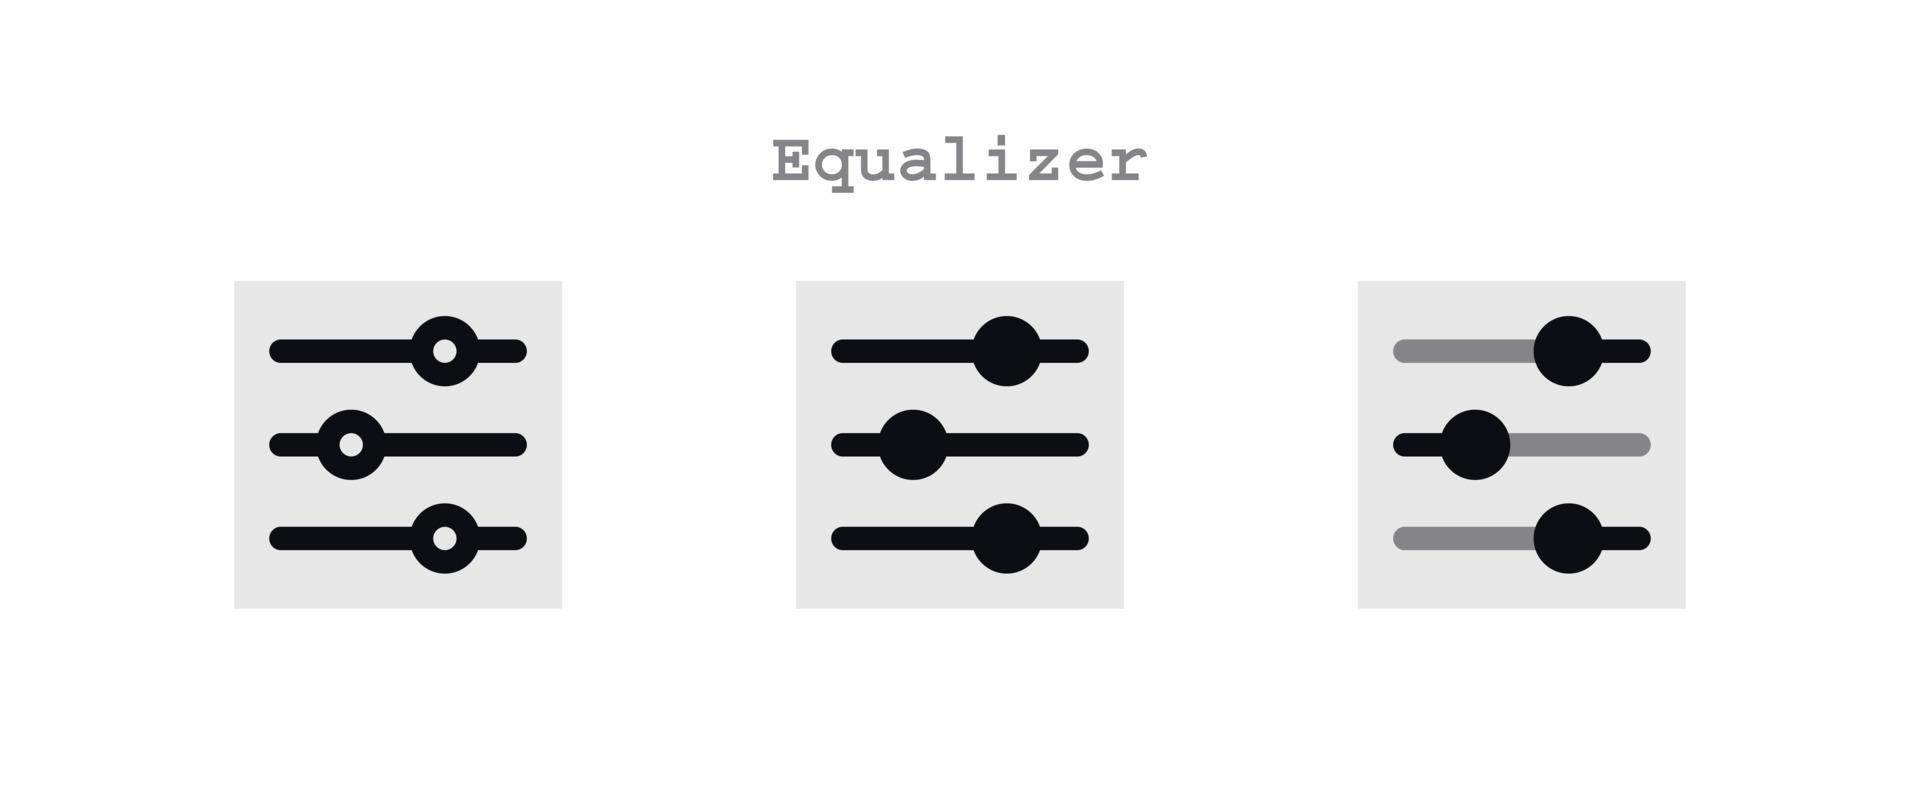 Equalizer-Symbole gesetzt vektor